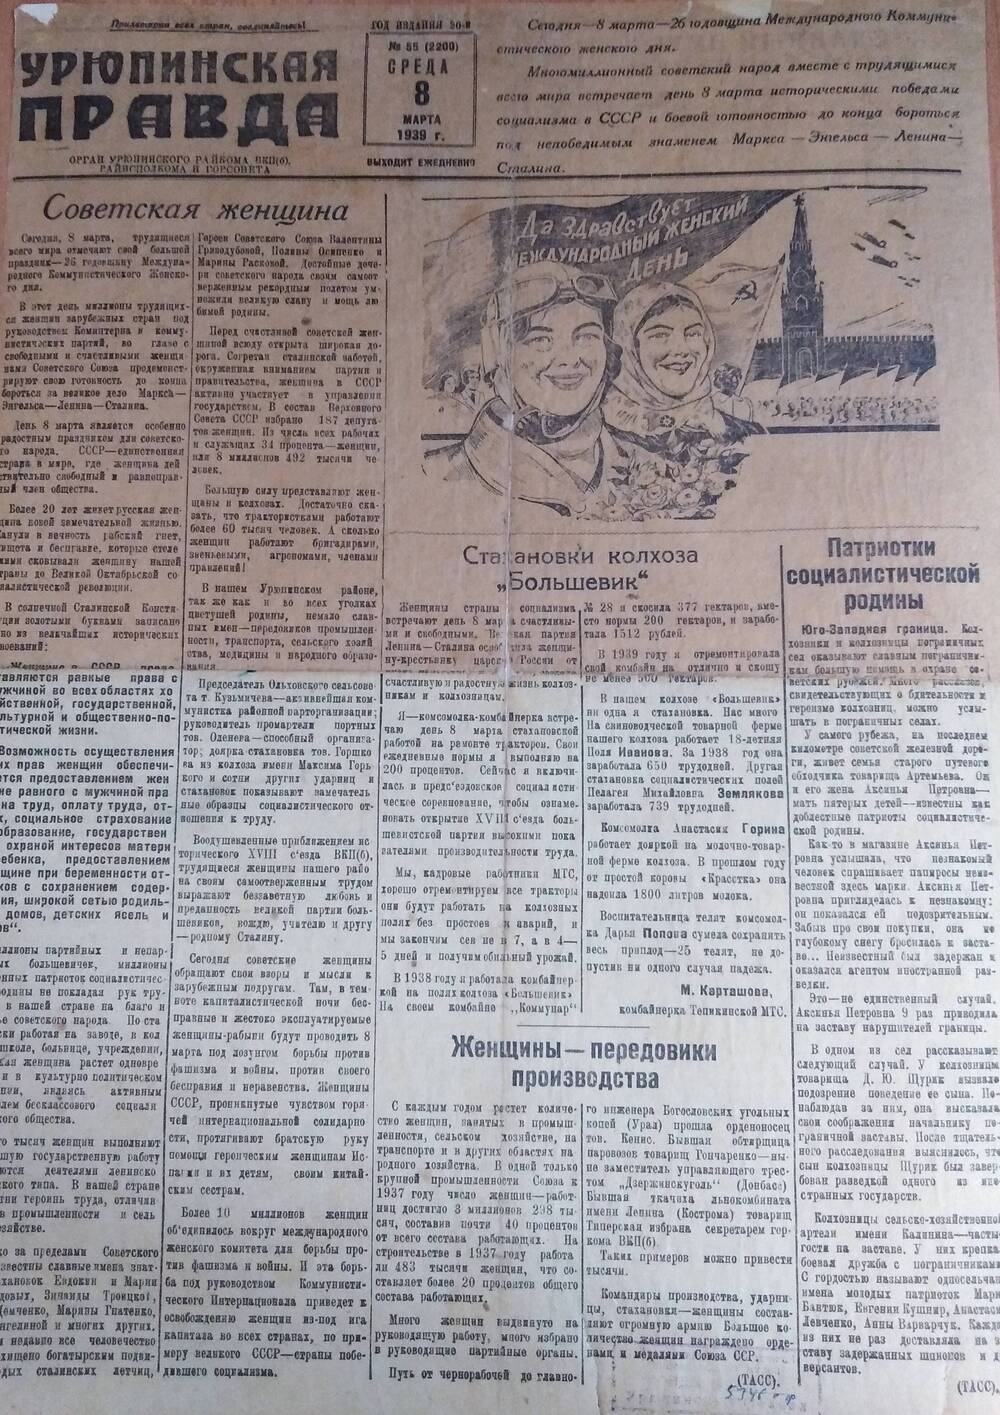 Газета Урюпинская правда, 8 марта 1939 г.